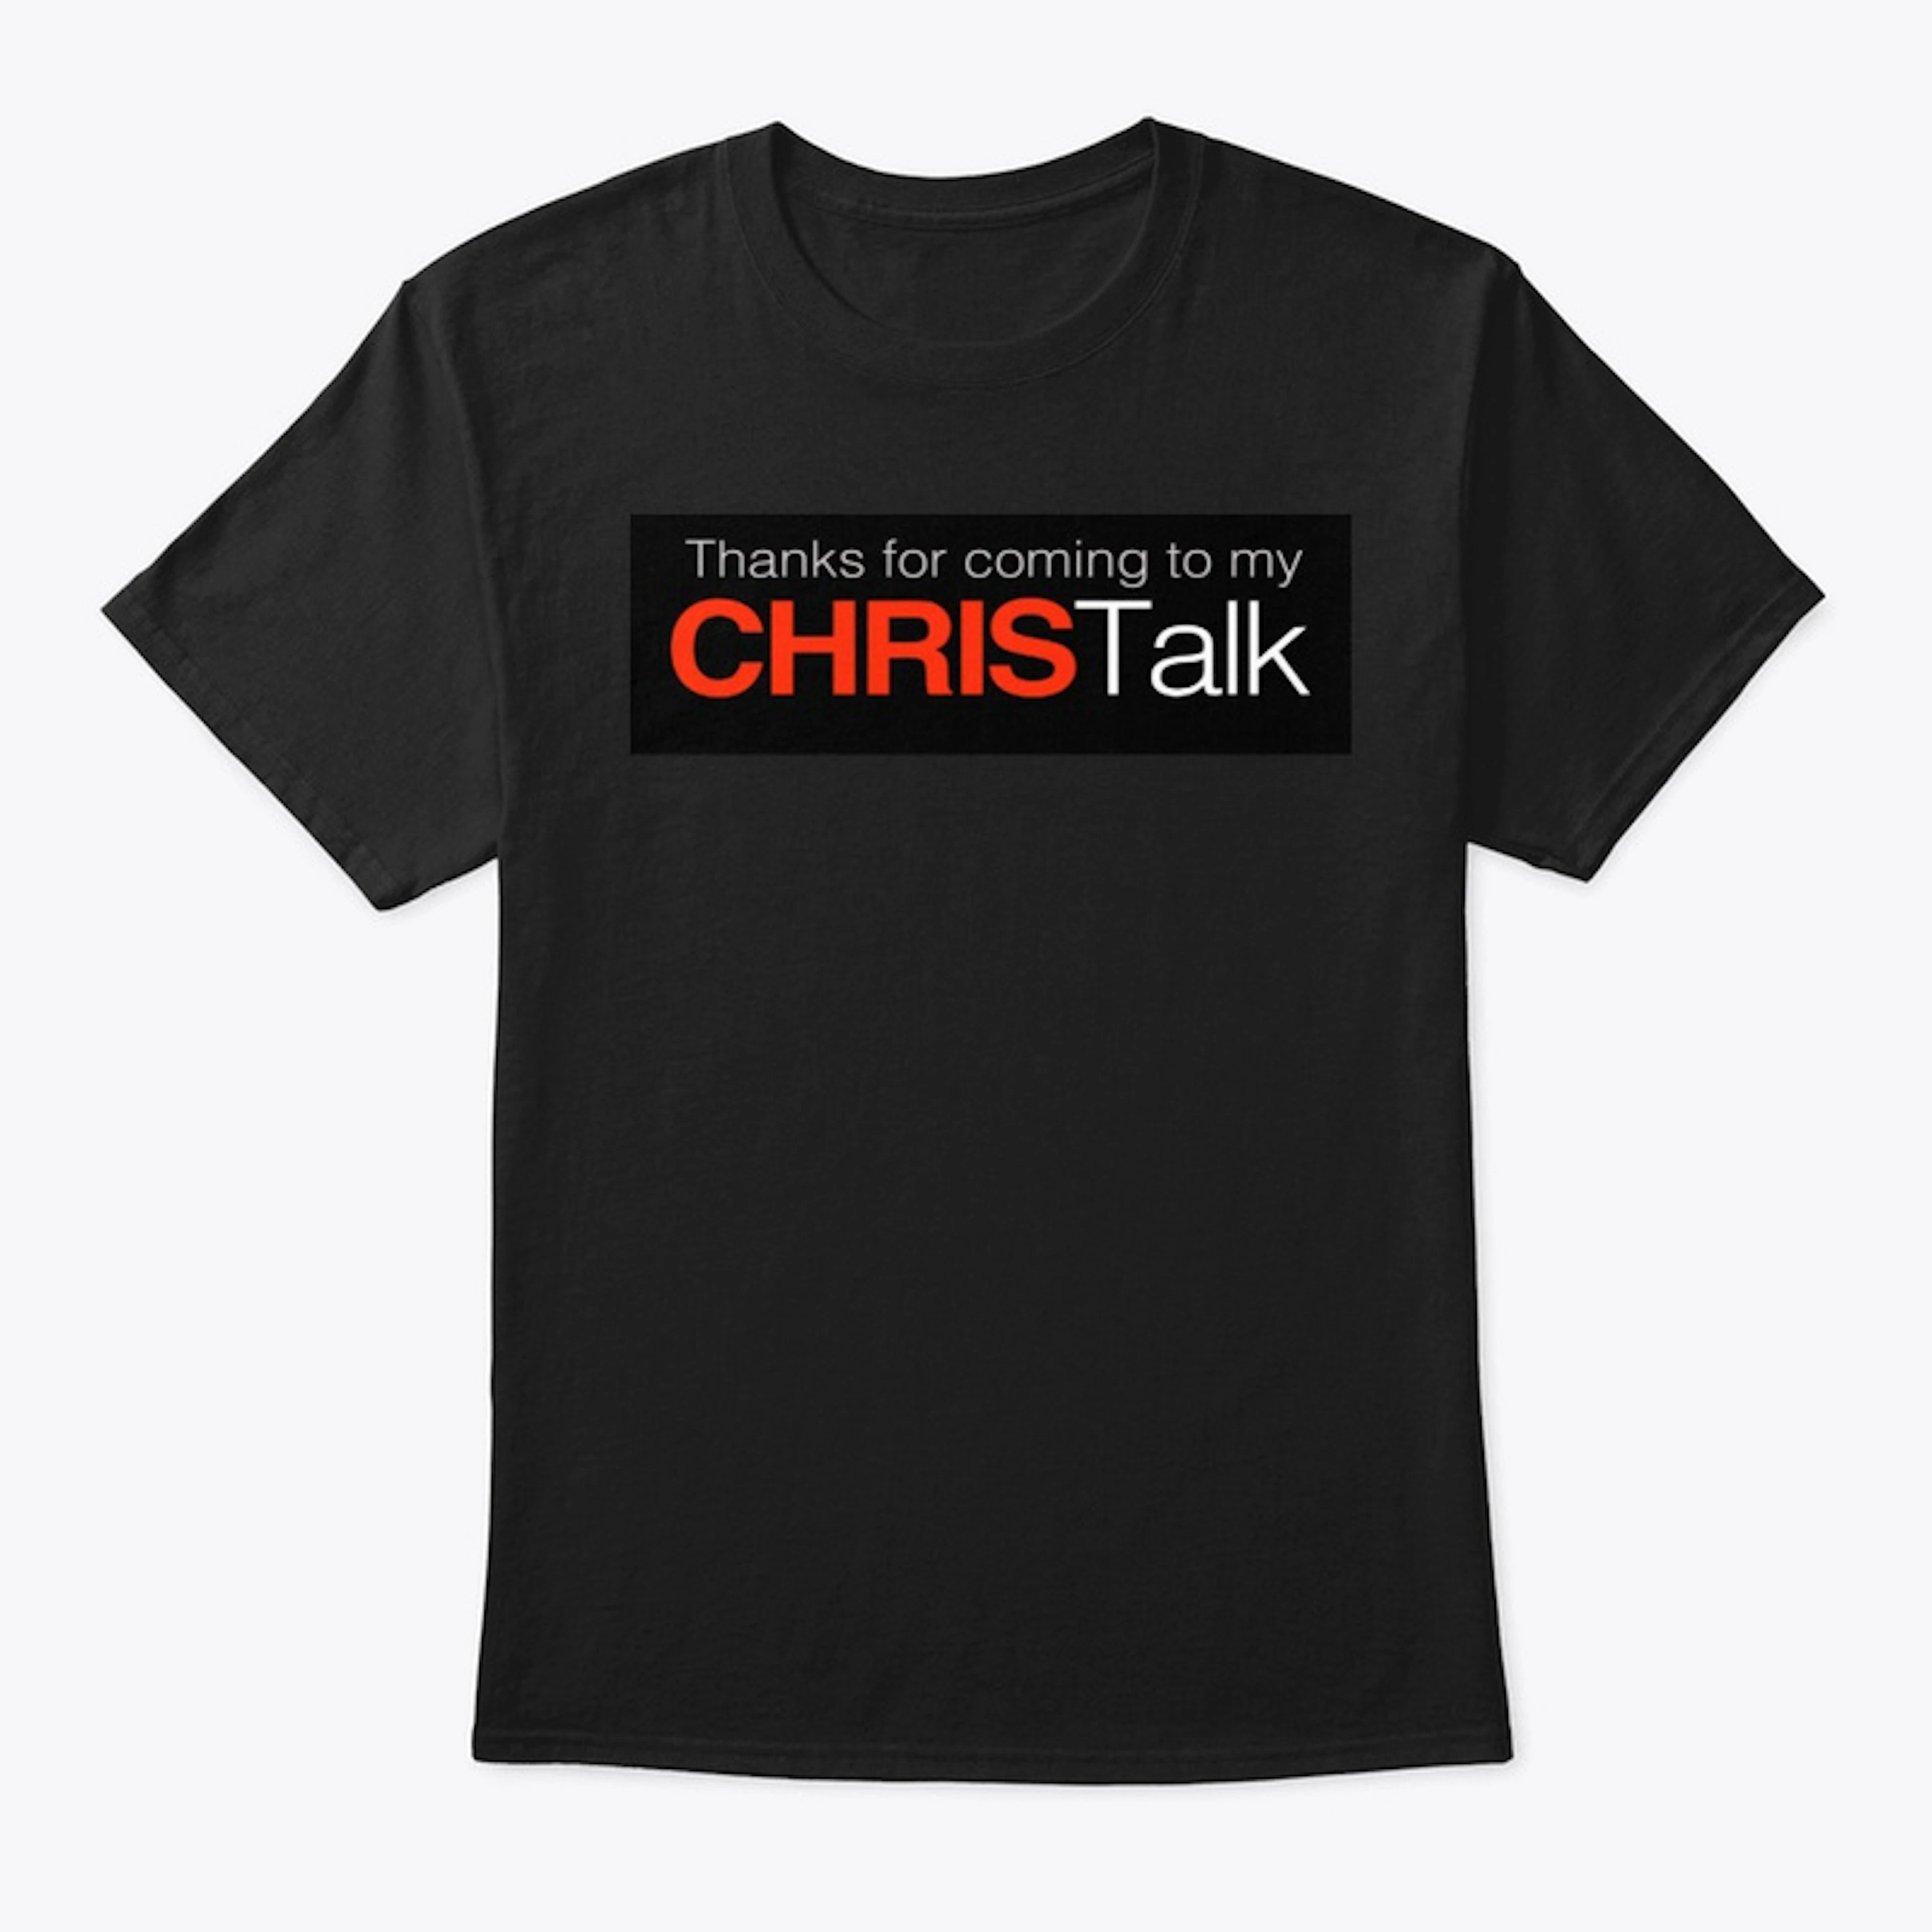 My Chris Talk